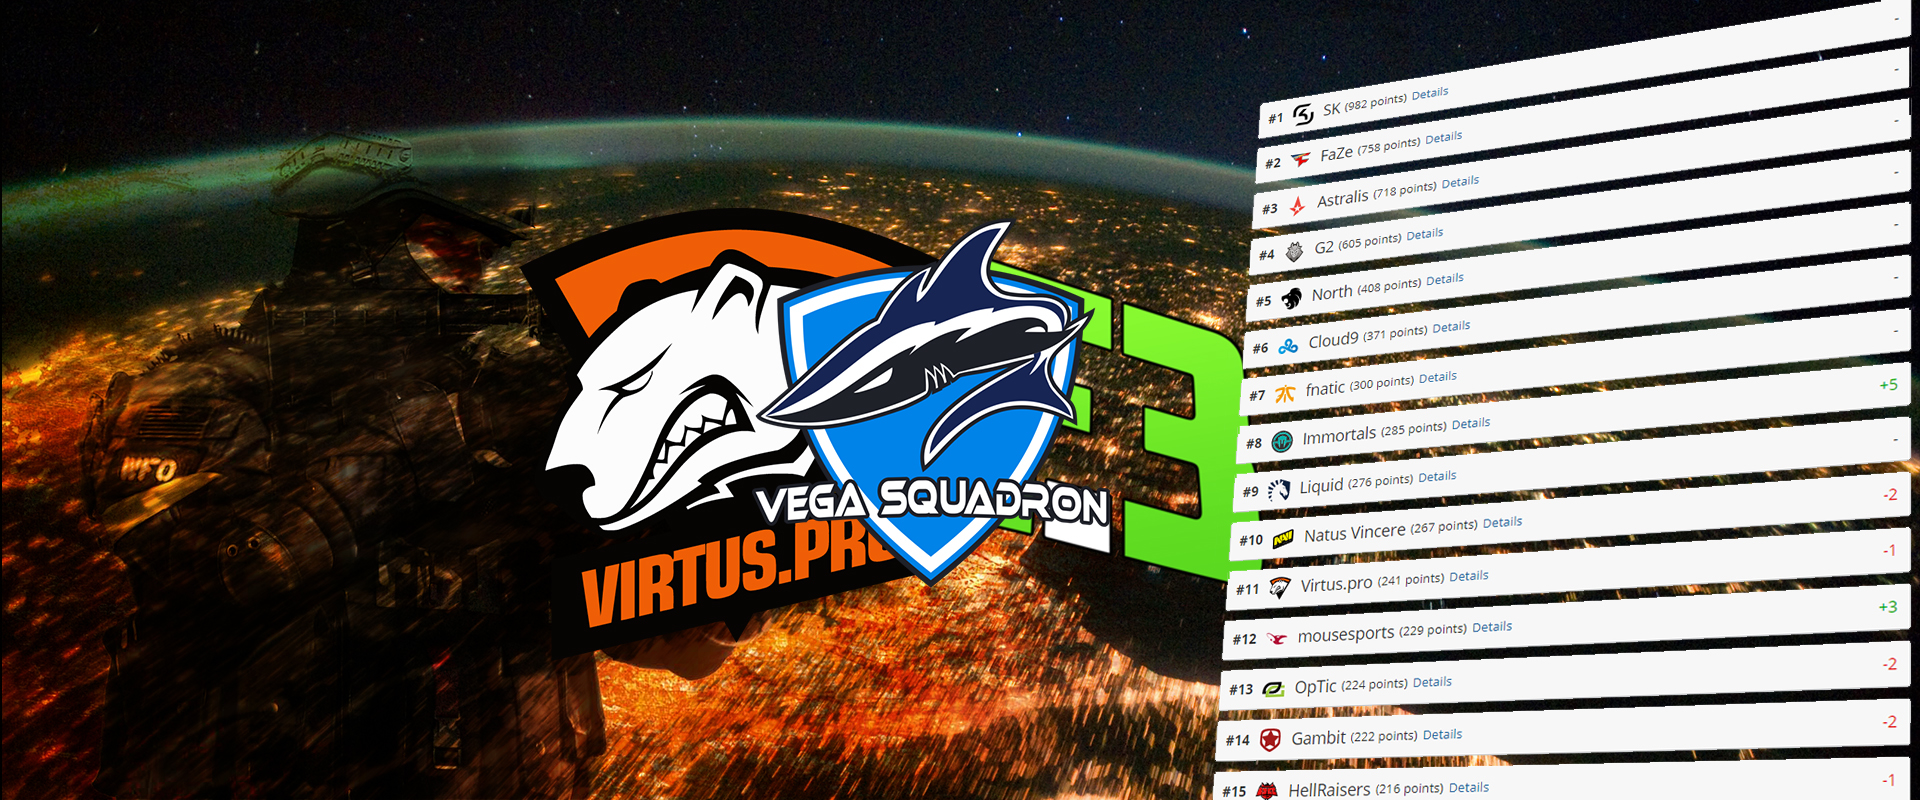 Bye Bye Virtus.pro, hello Flipsid3, hello Vega Squadron